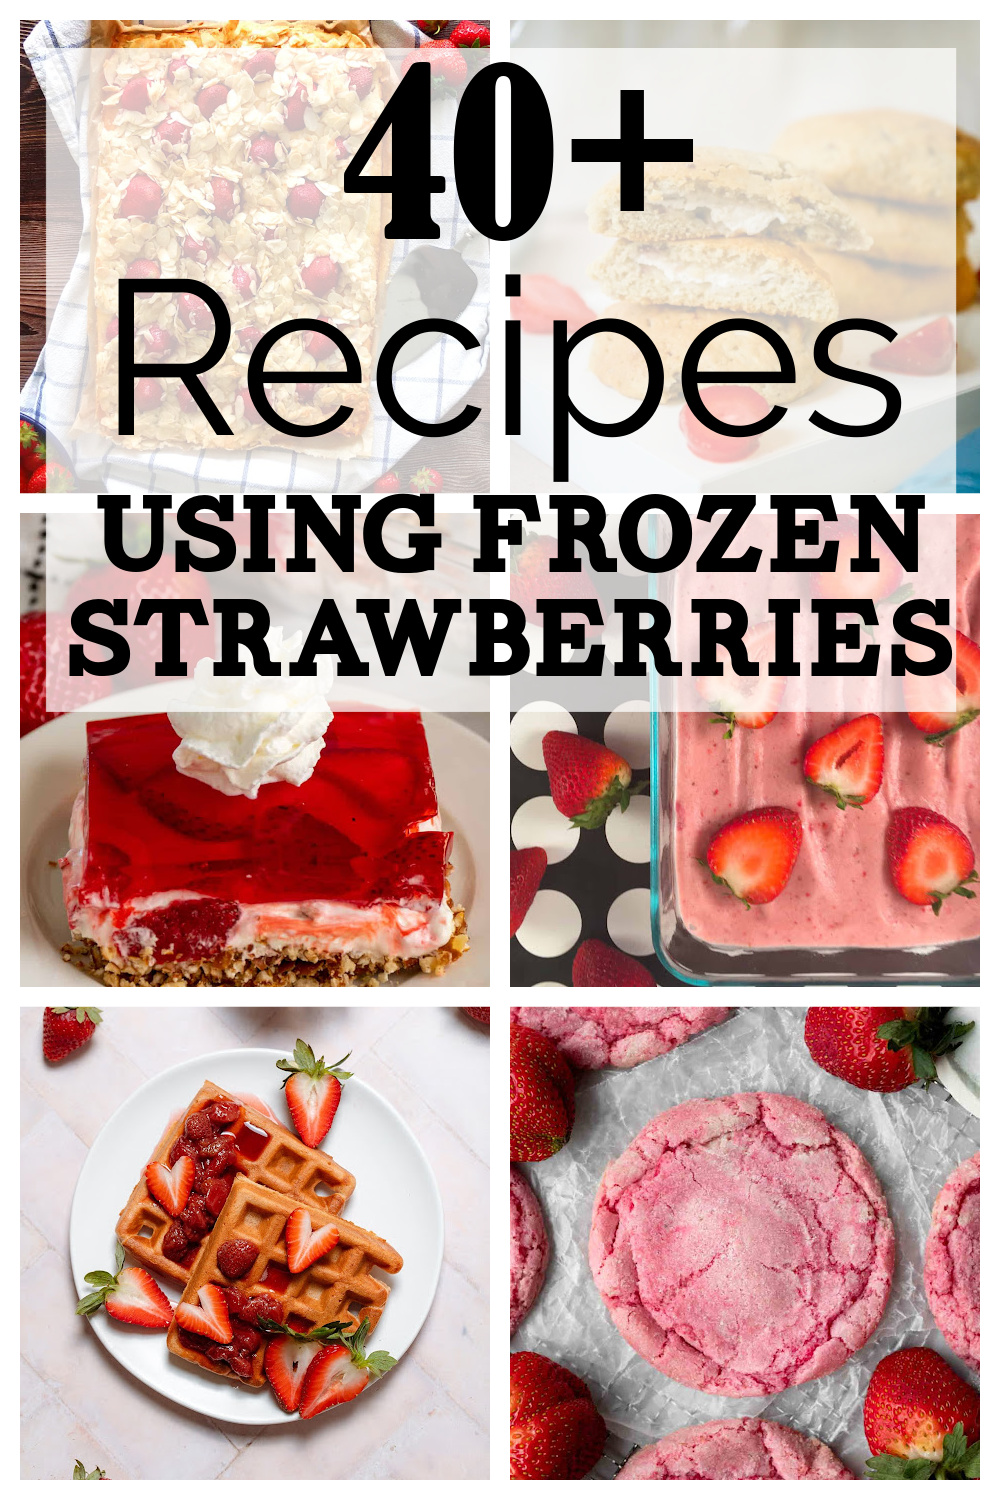 Easy 2-Minute 2-Ingredient Frozen Fruit Smoothie - Mom Spark - Mom Blogger